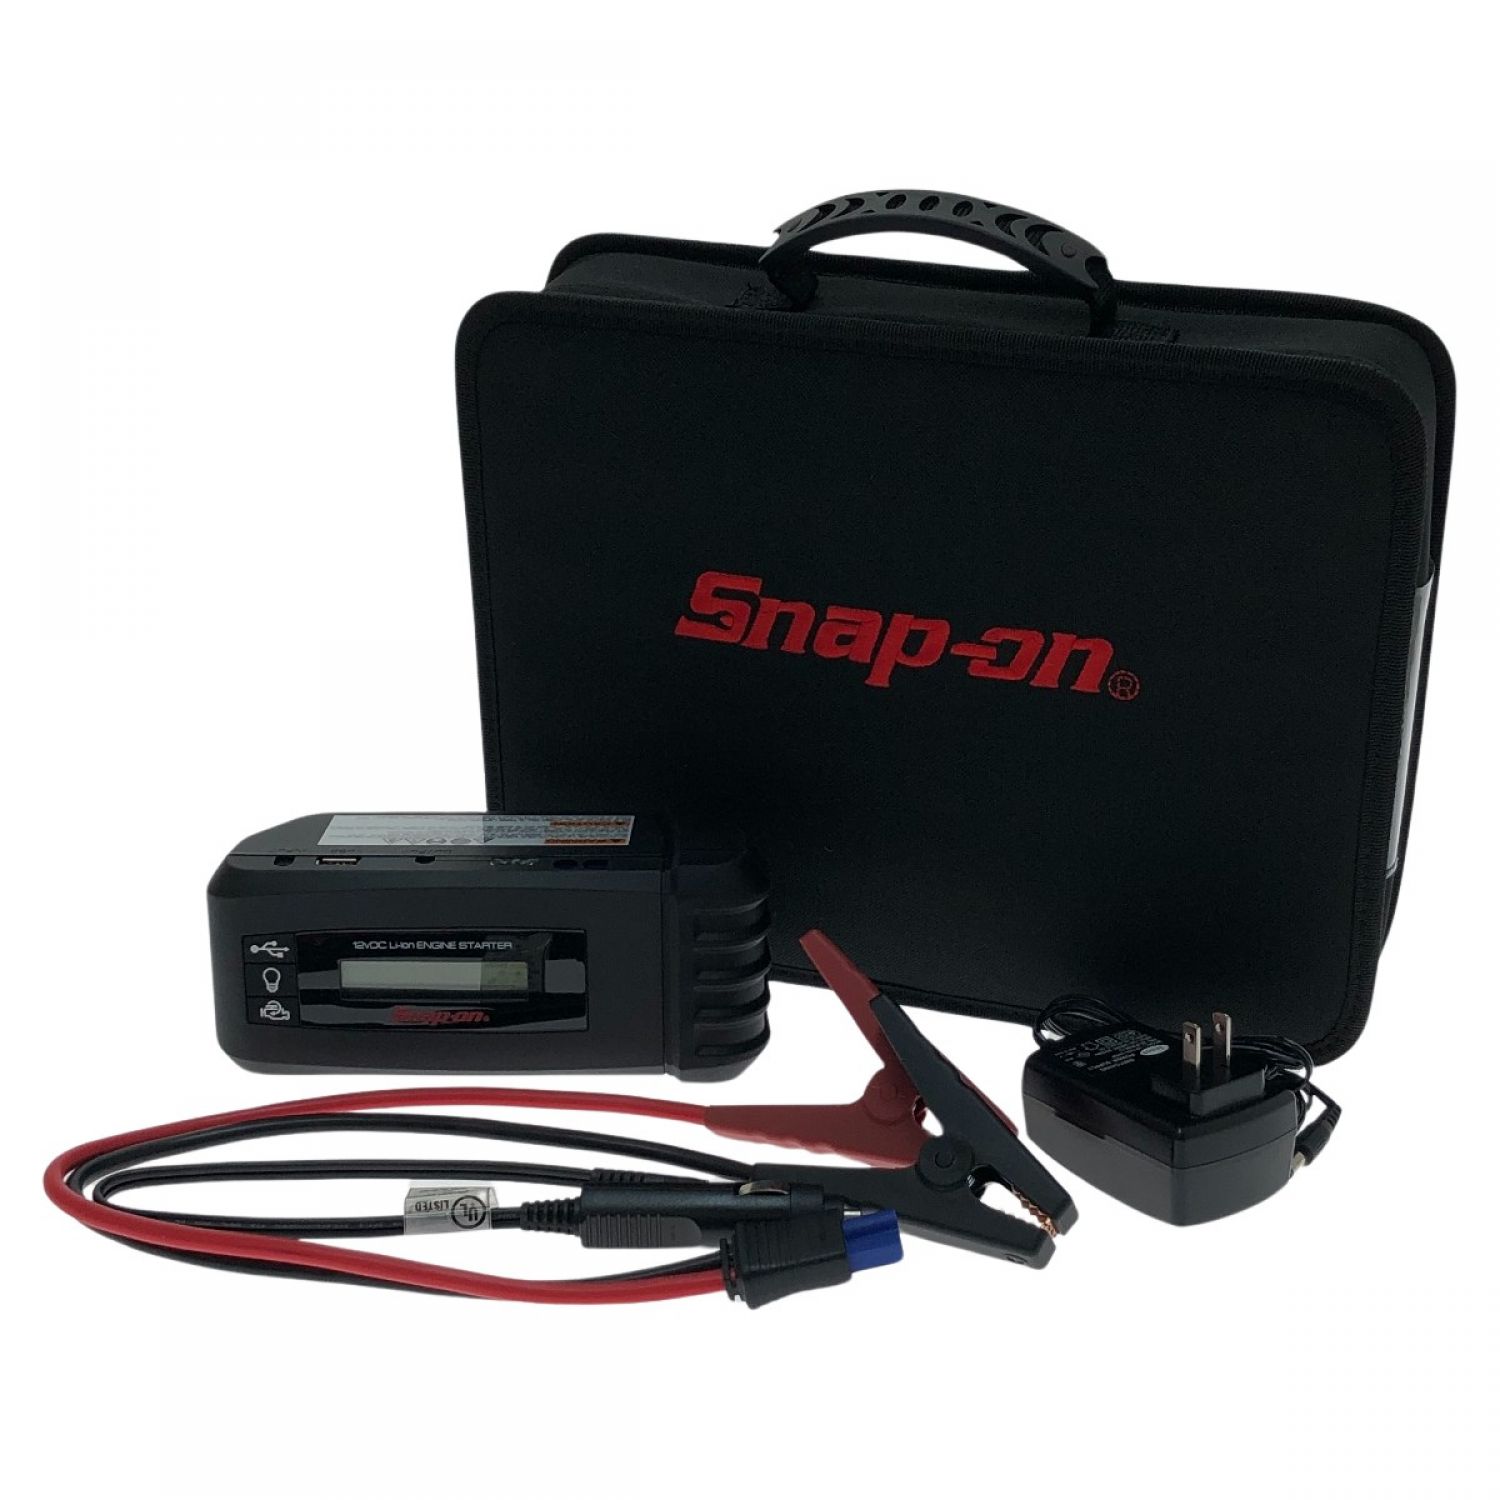 Snap-on 12V専用コンパクトエンジンスターター